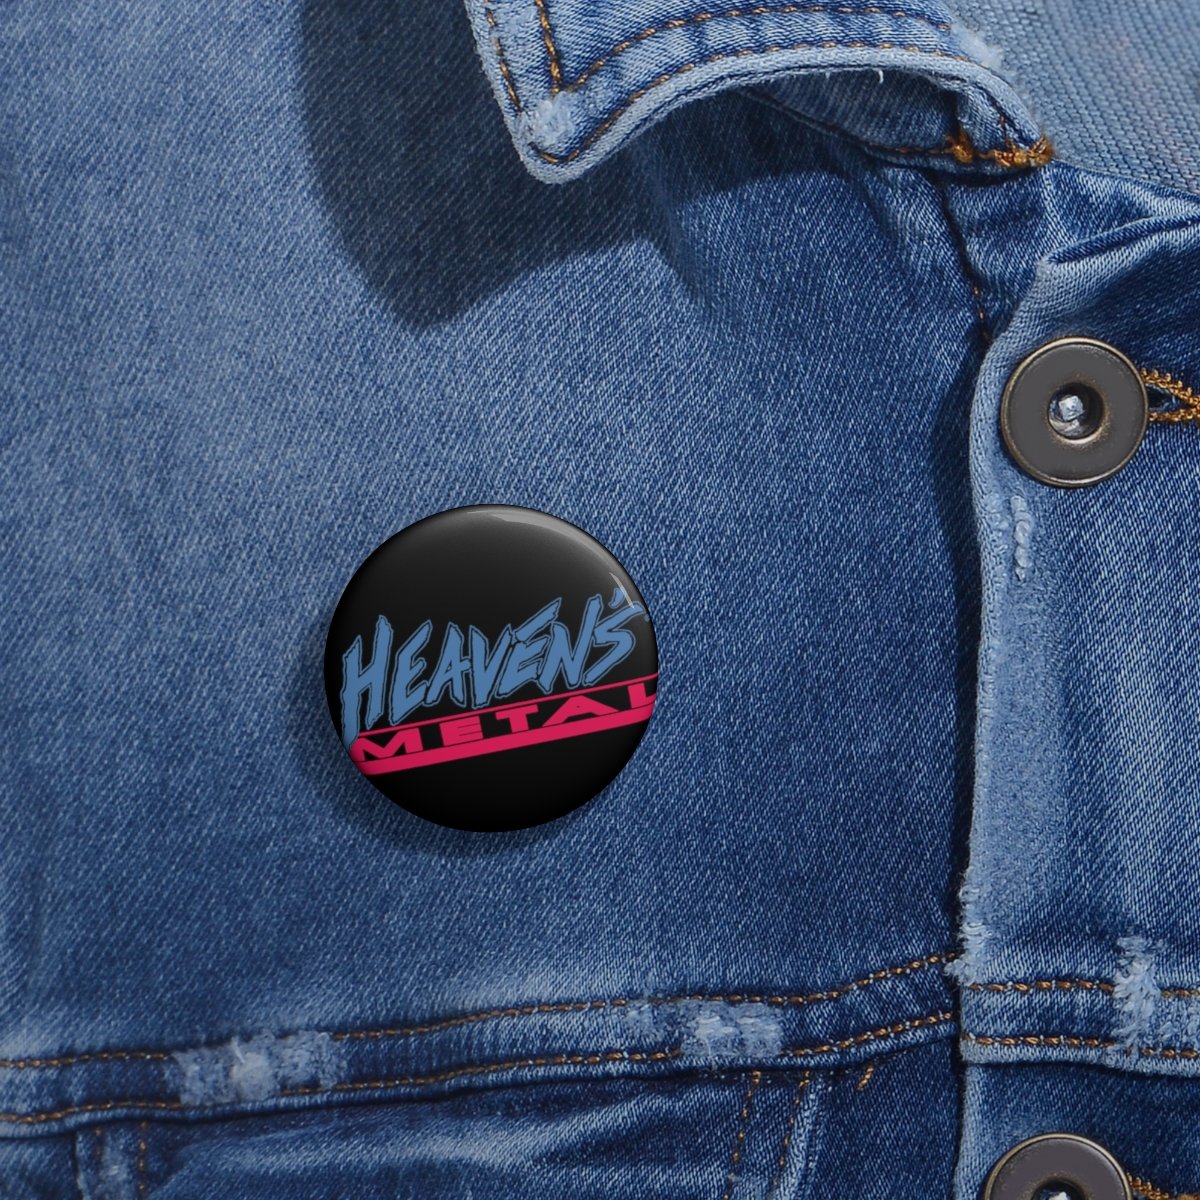 Heaven’s Metal Logo BM3 Pin Buttons